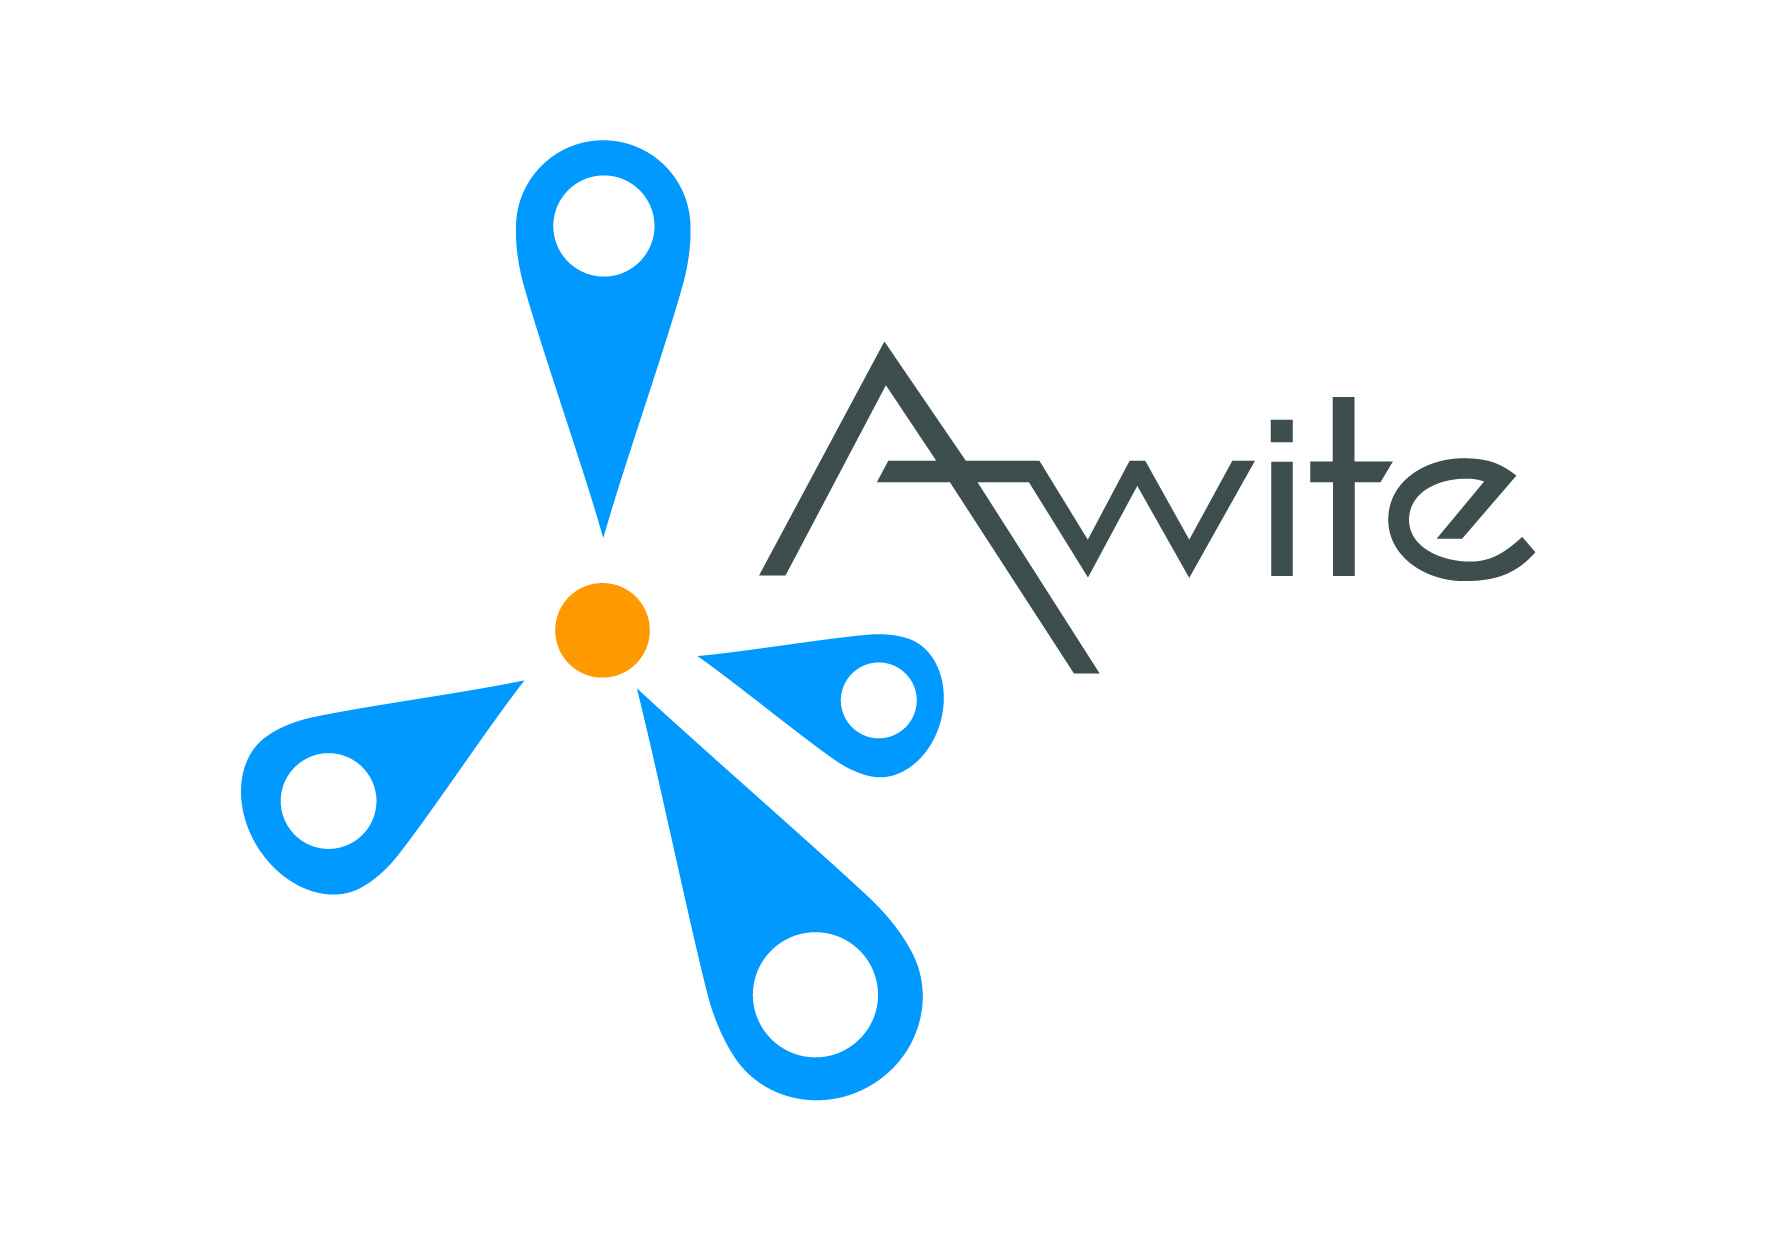 Awite Bioenergie GmbH